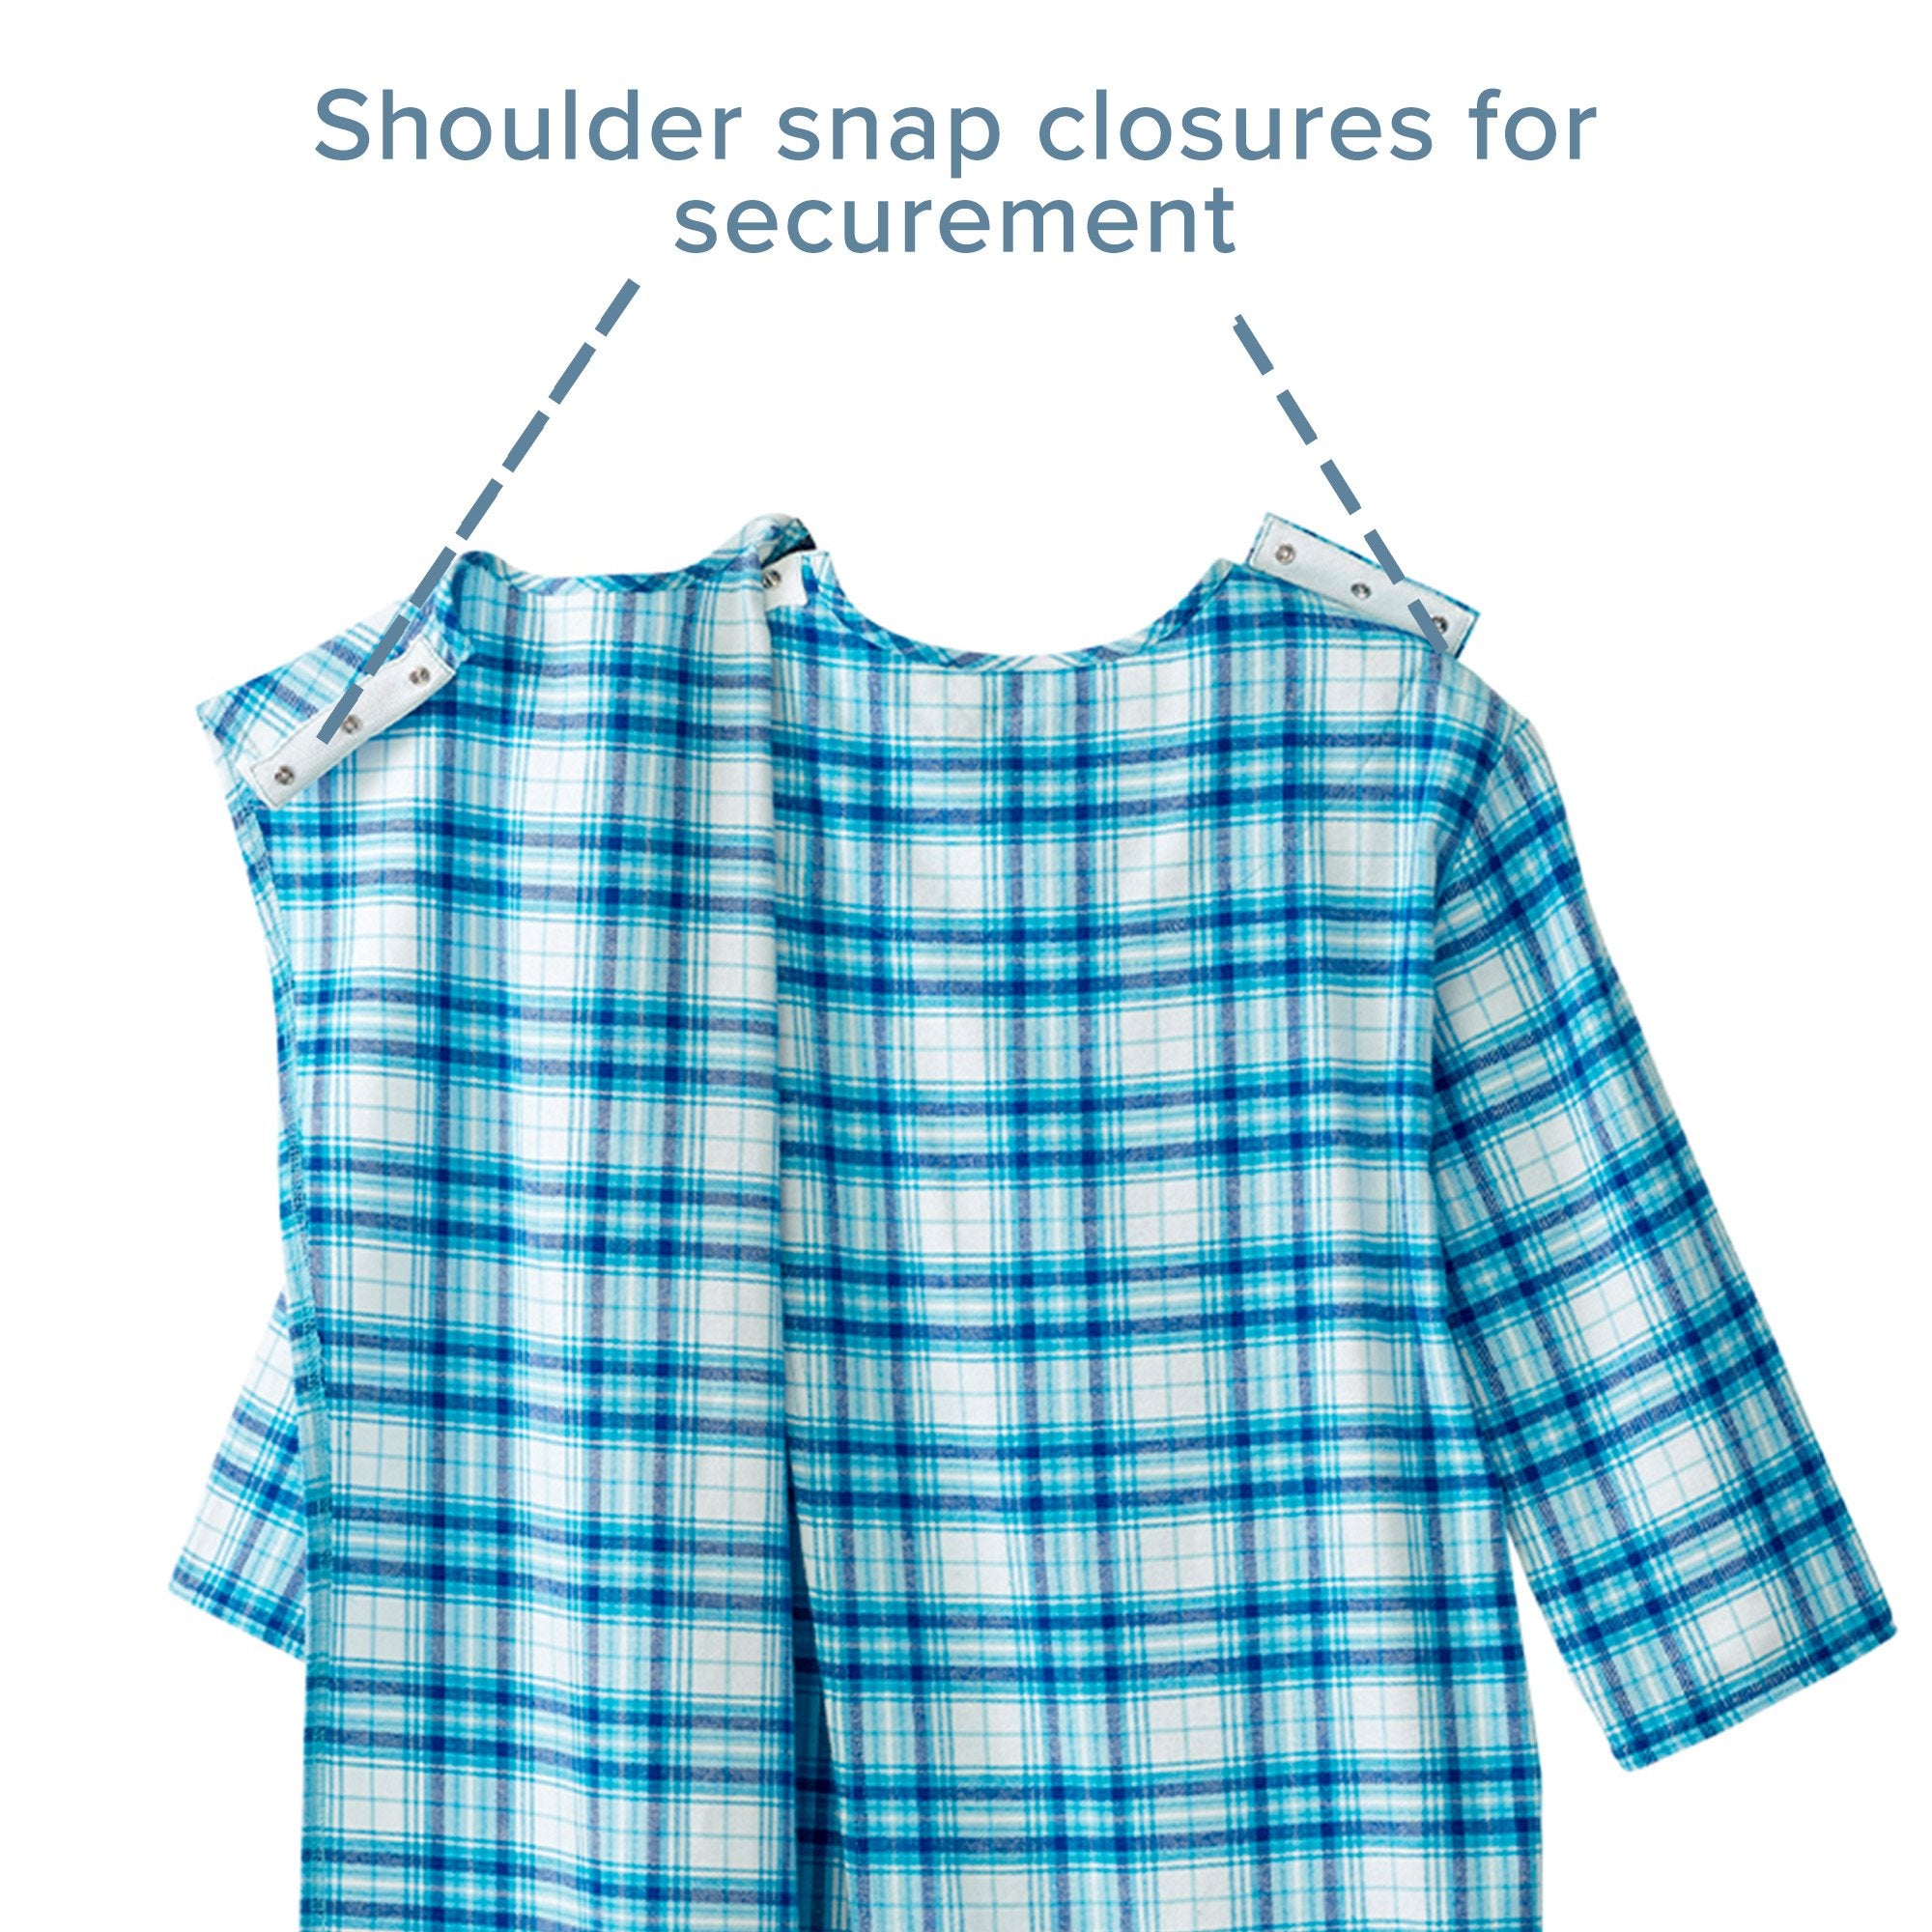 Silverts® Shoulder Snap Patient Exam Gown, Small, Turquoise Plaid (1 Unit)